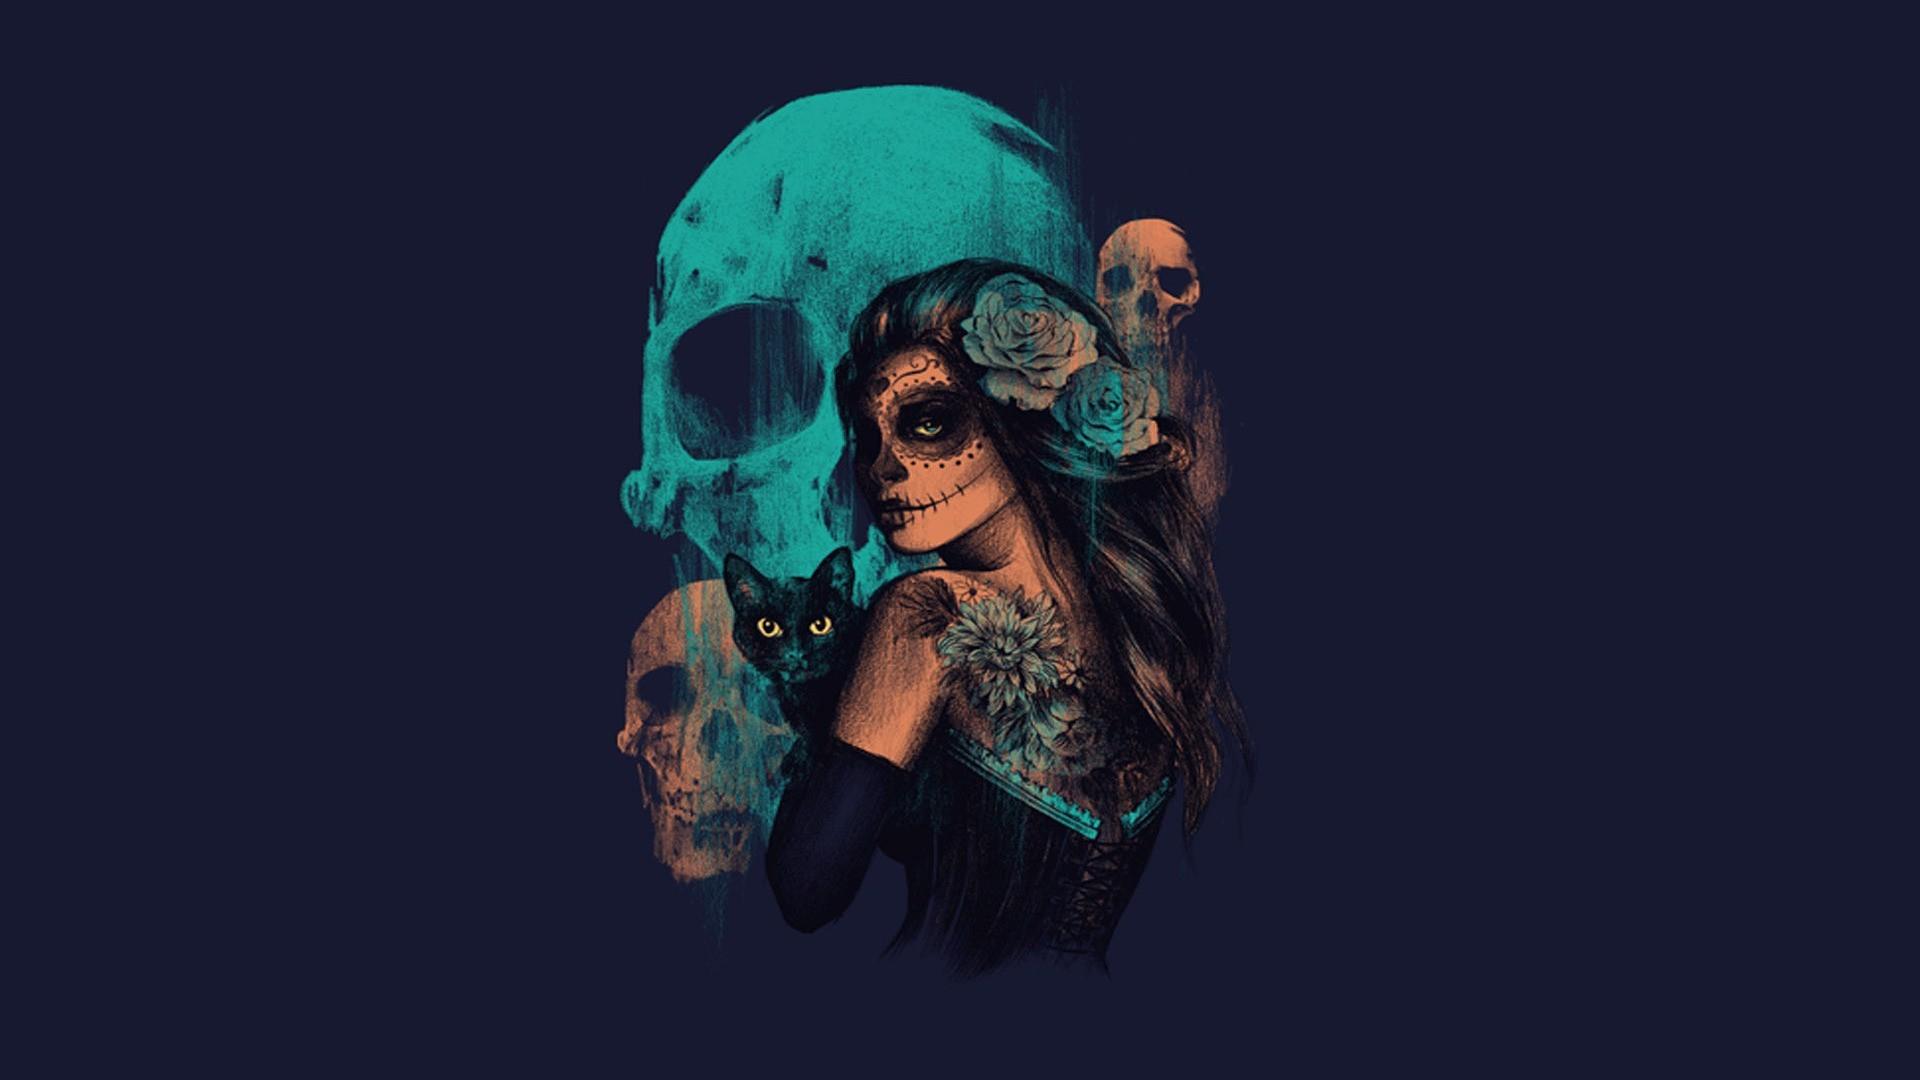 Artistic Sugar Skull HD Wallpaper | Background Image